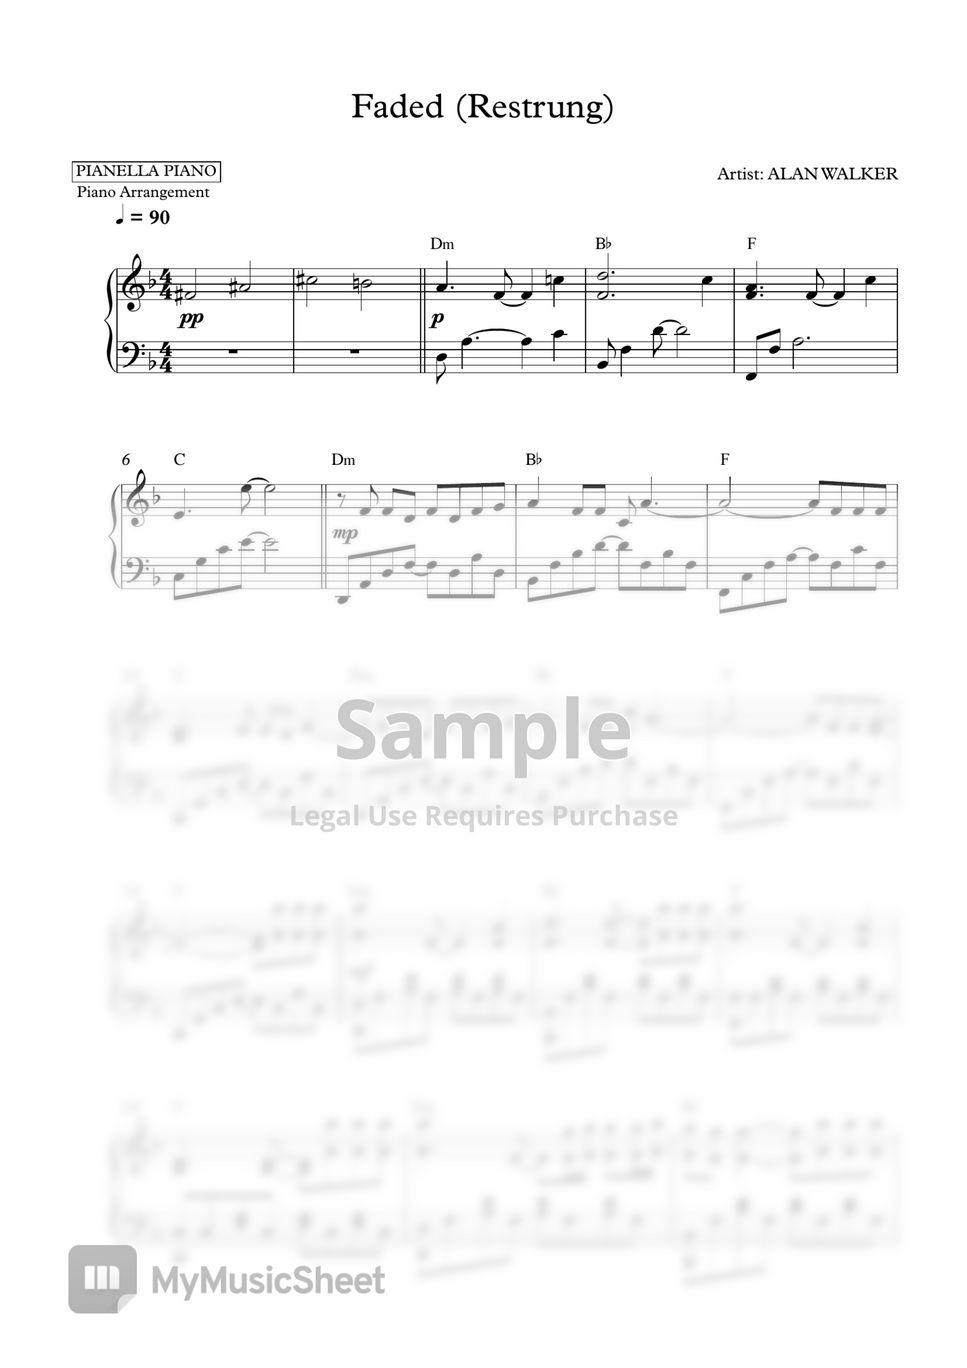 Alan Walker - FADED - Restrung (Piano Sheet) by Pianella Piano